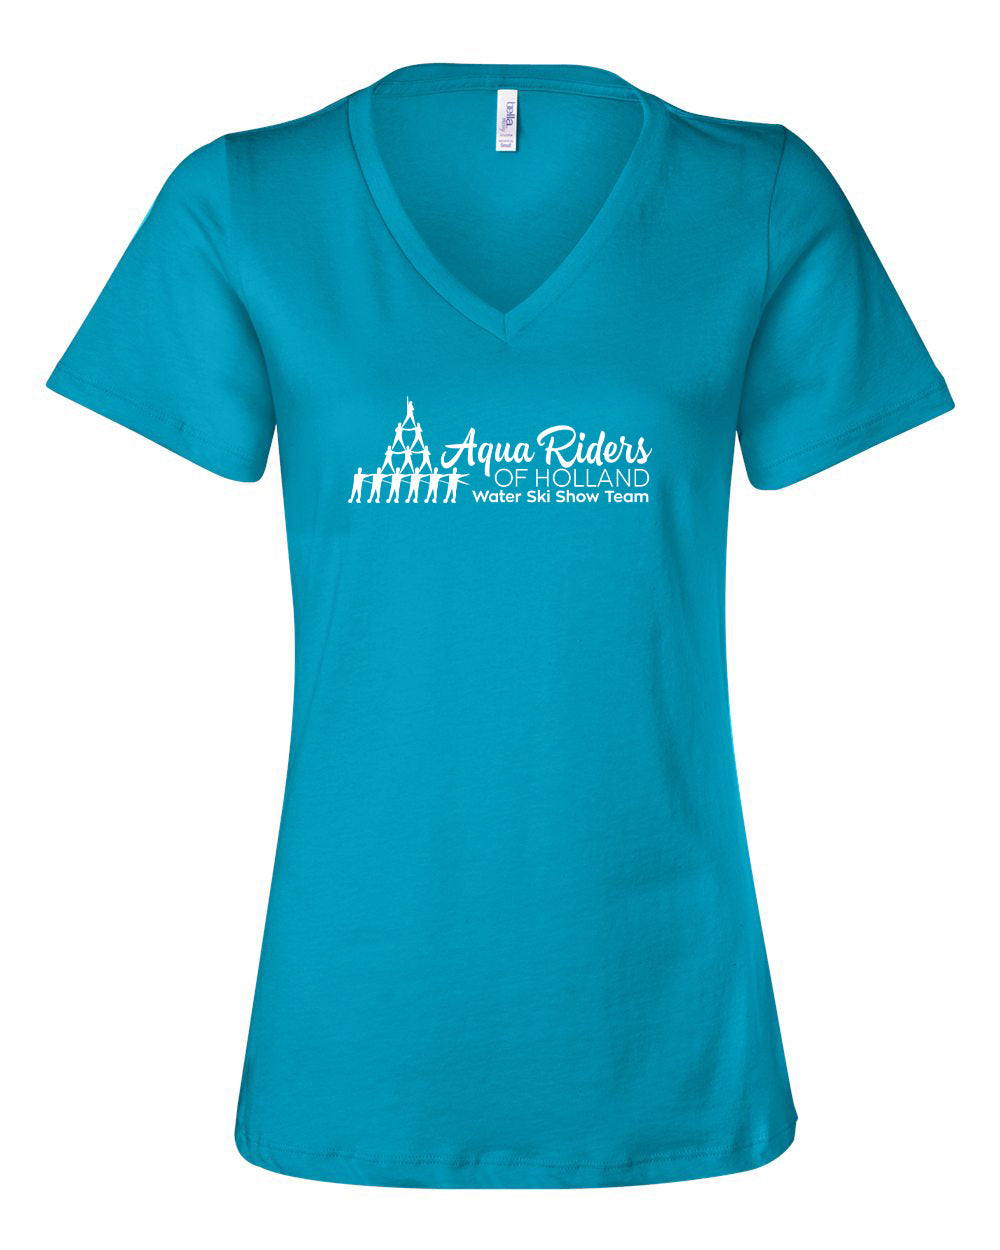 Aqua Riders - Ladies T-shirt - 6405 (color options available)